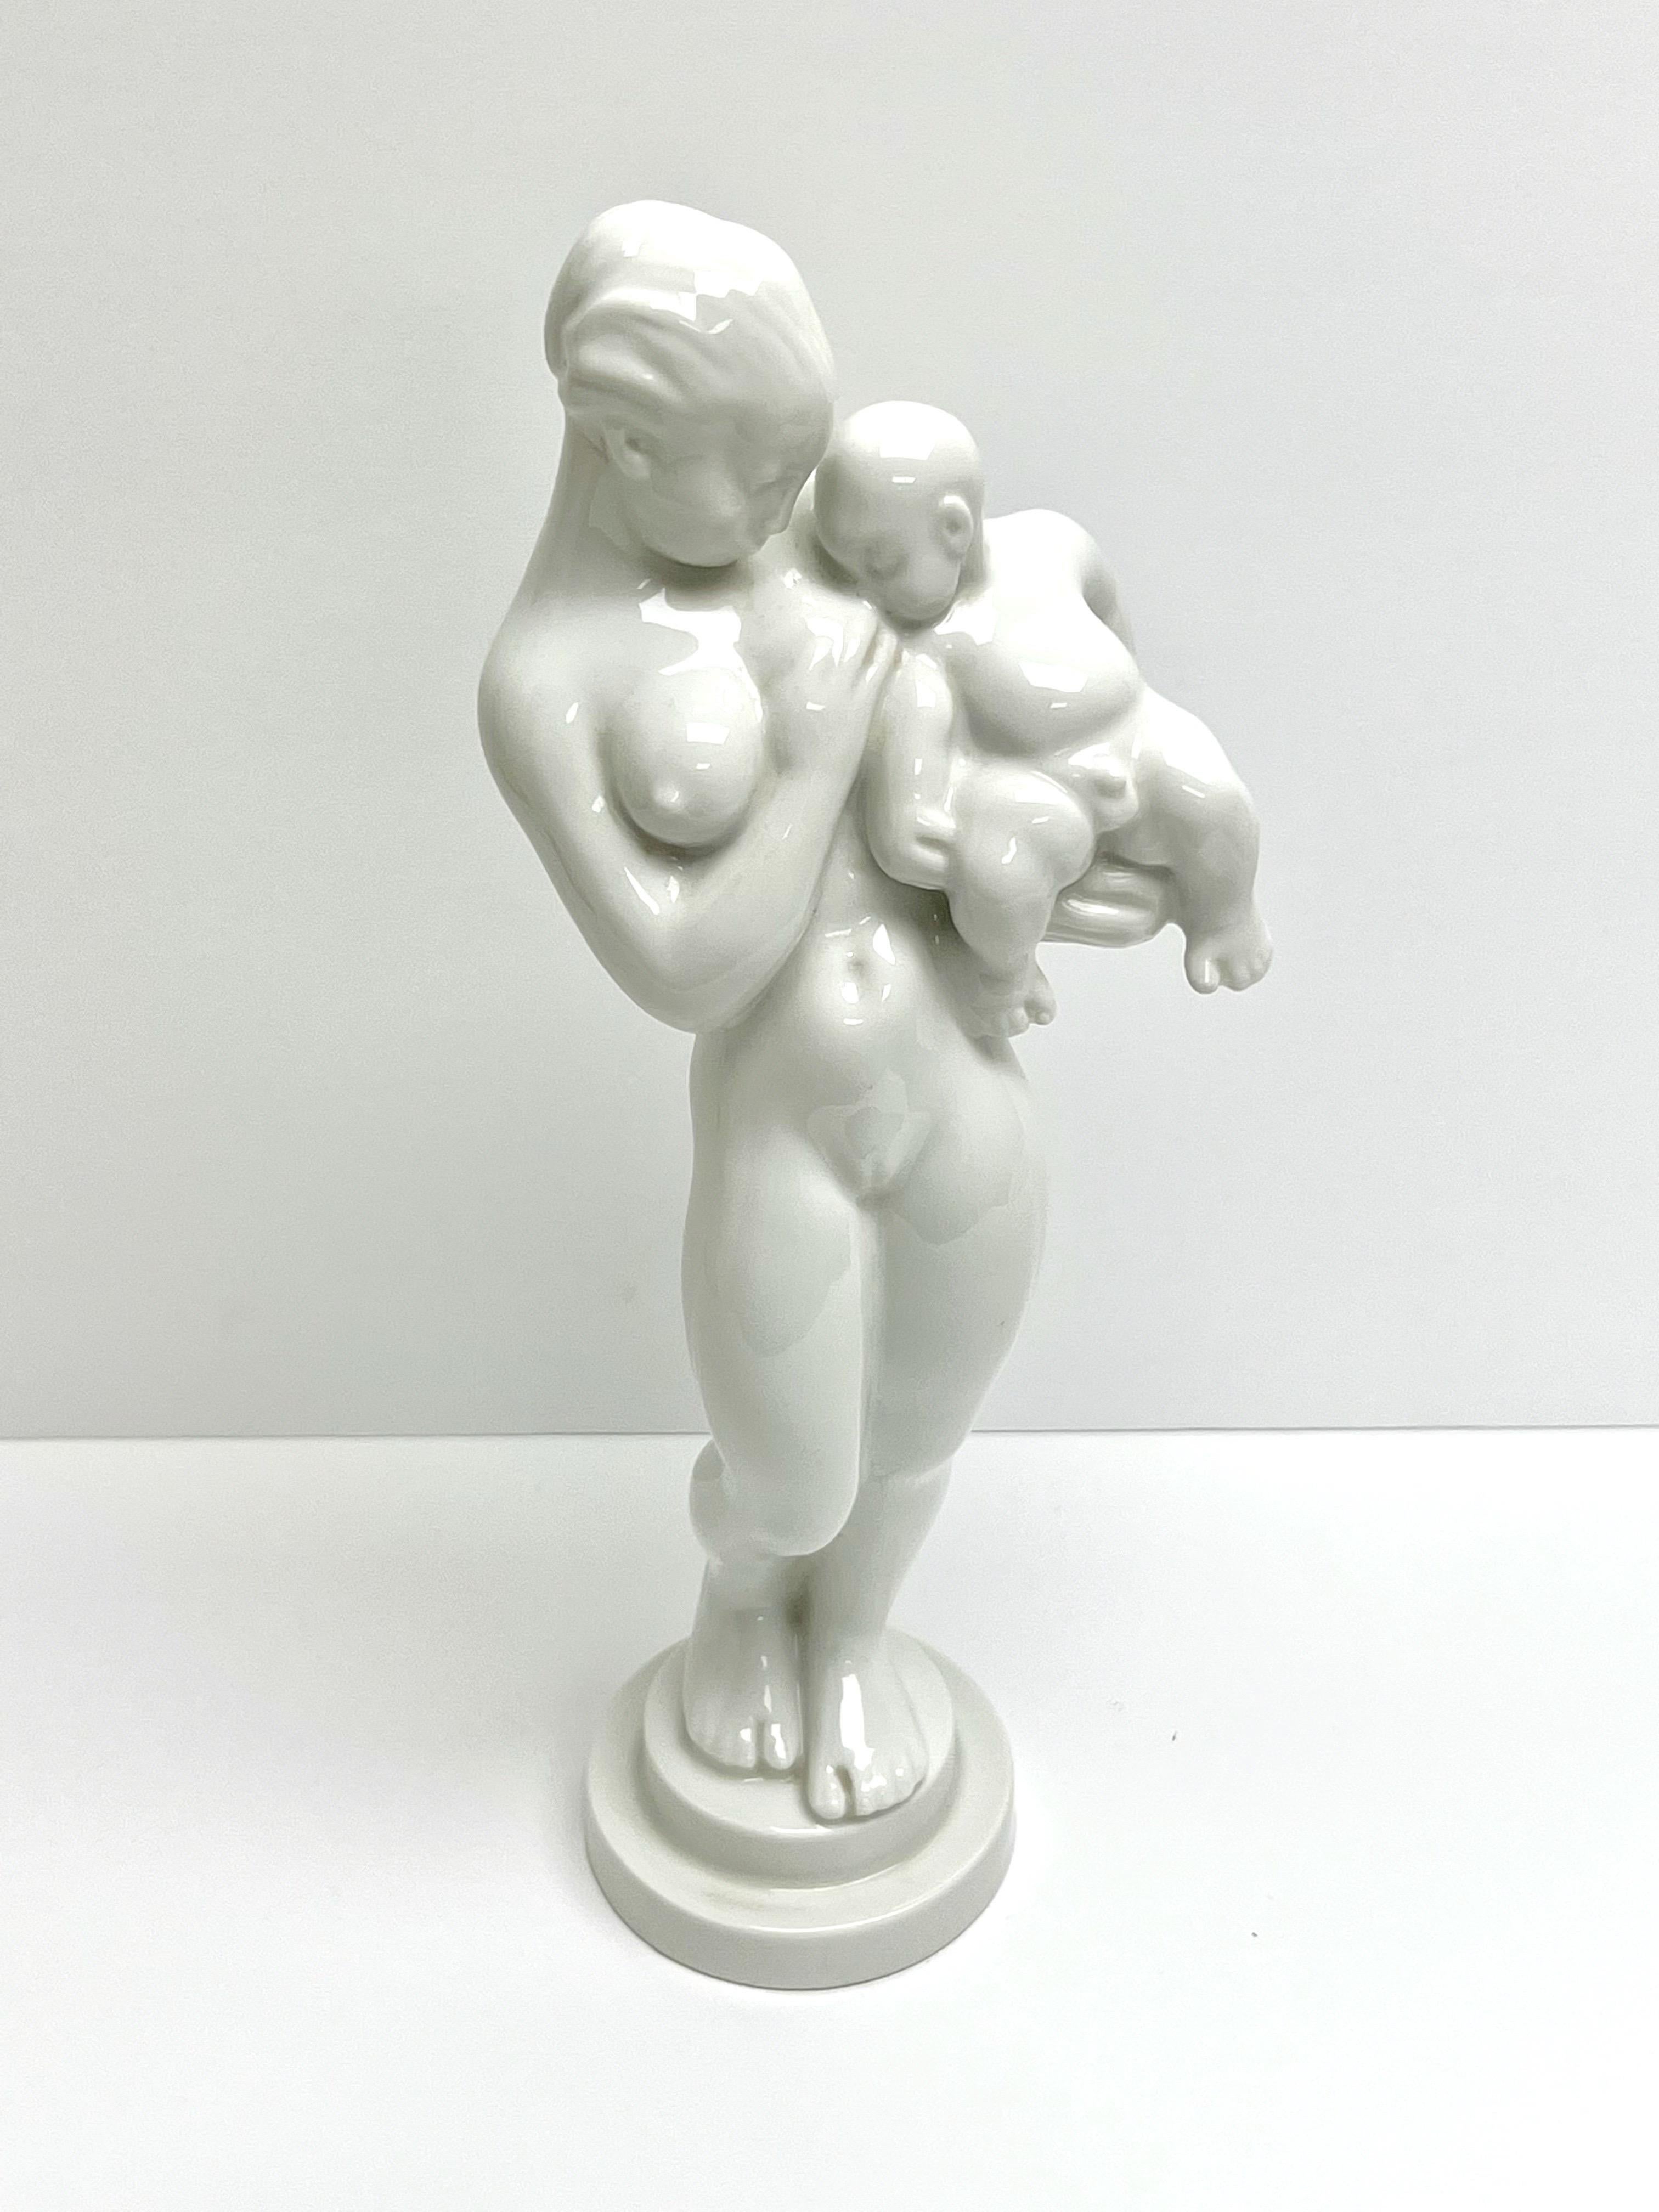 A Kai Nielsen B&G bland de chine porcelain figurine sculpture. A mother with baby.